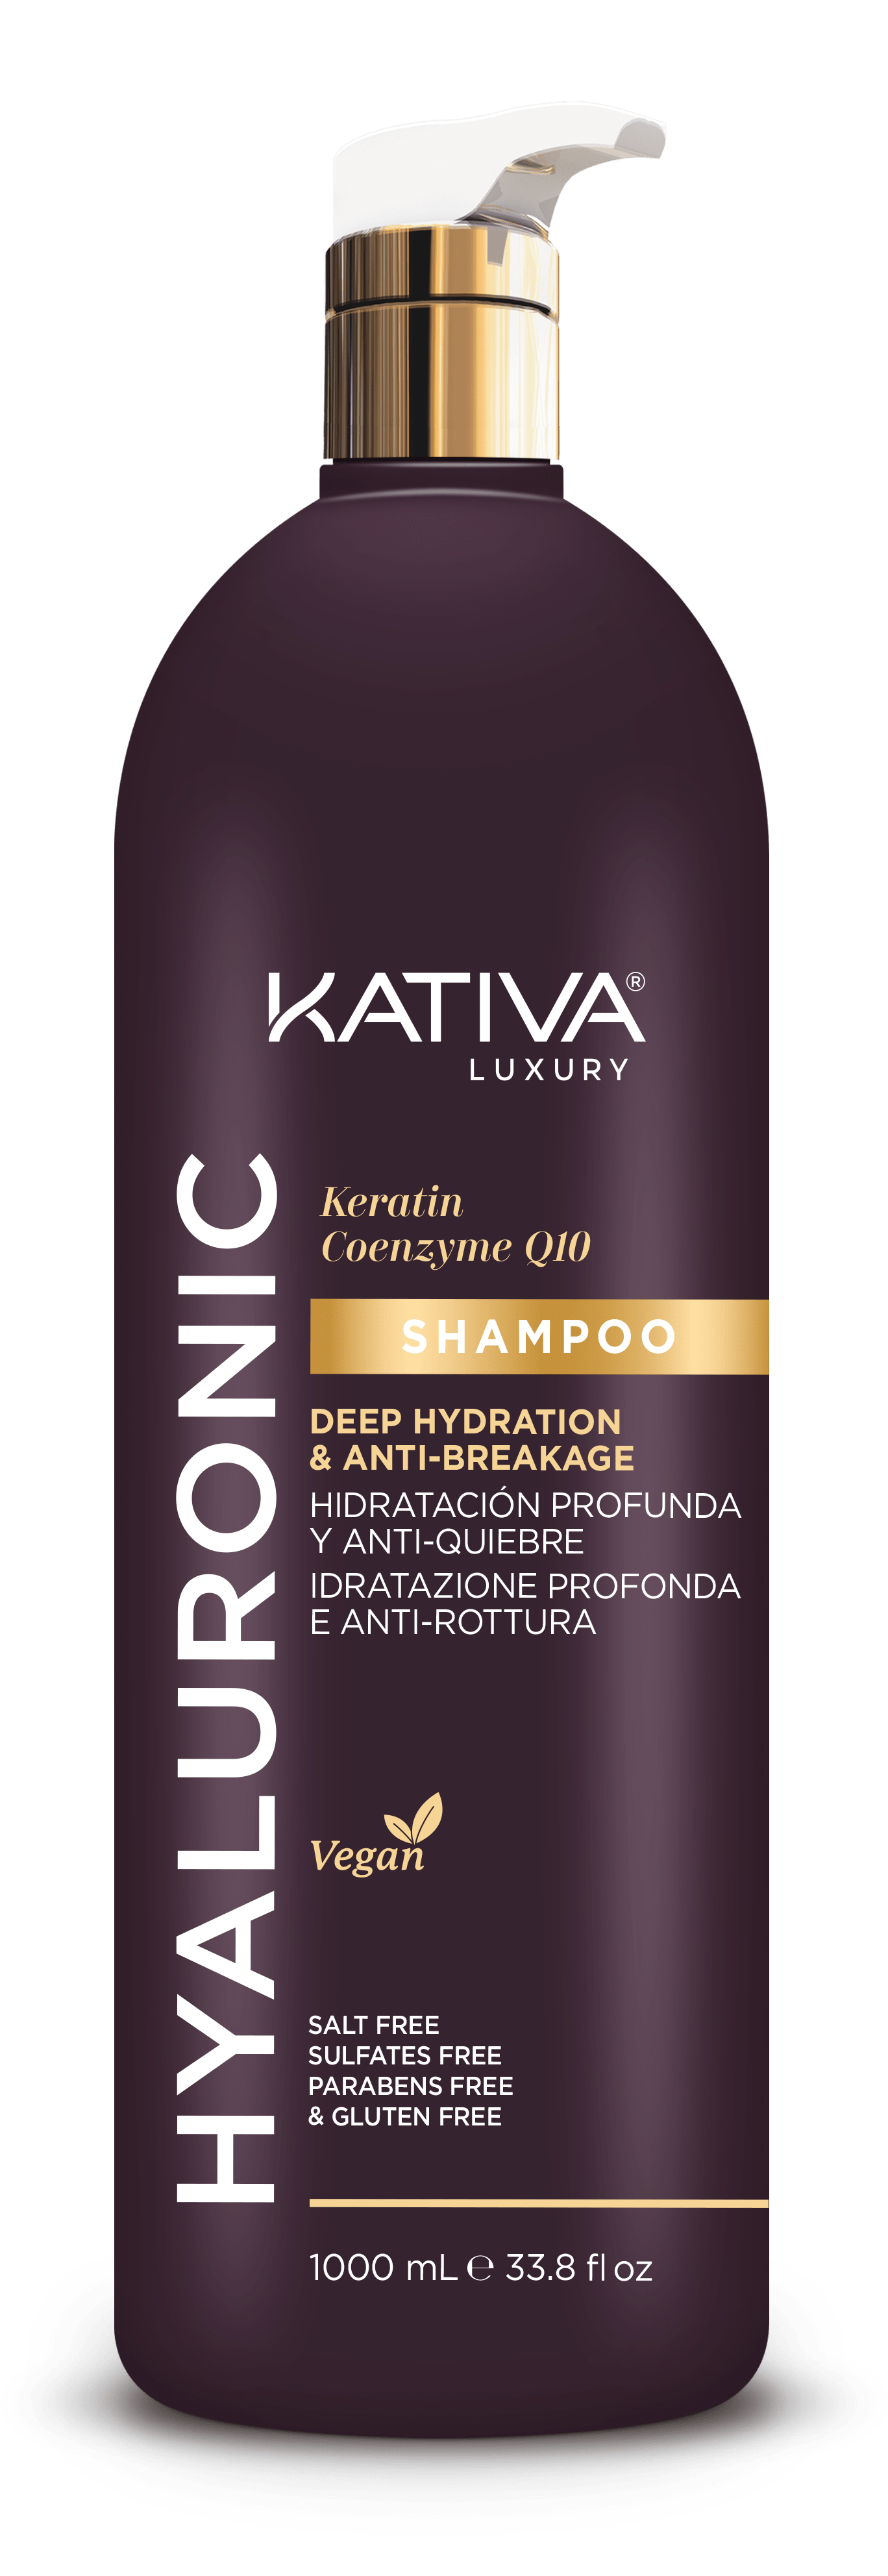 Kit Shampoo Y Acondicionador Hyaluronic Kativa 